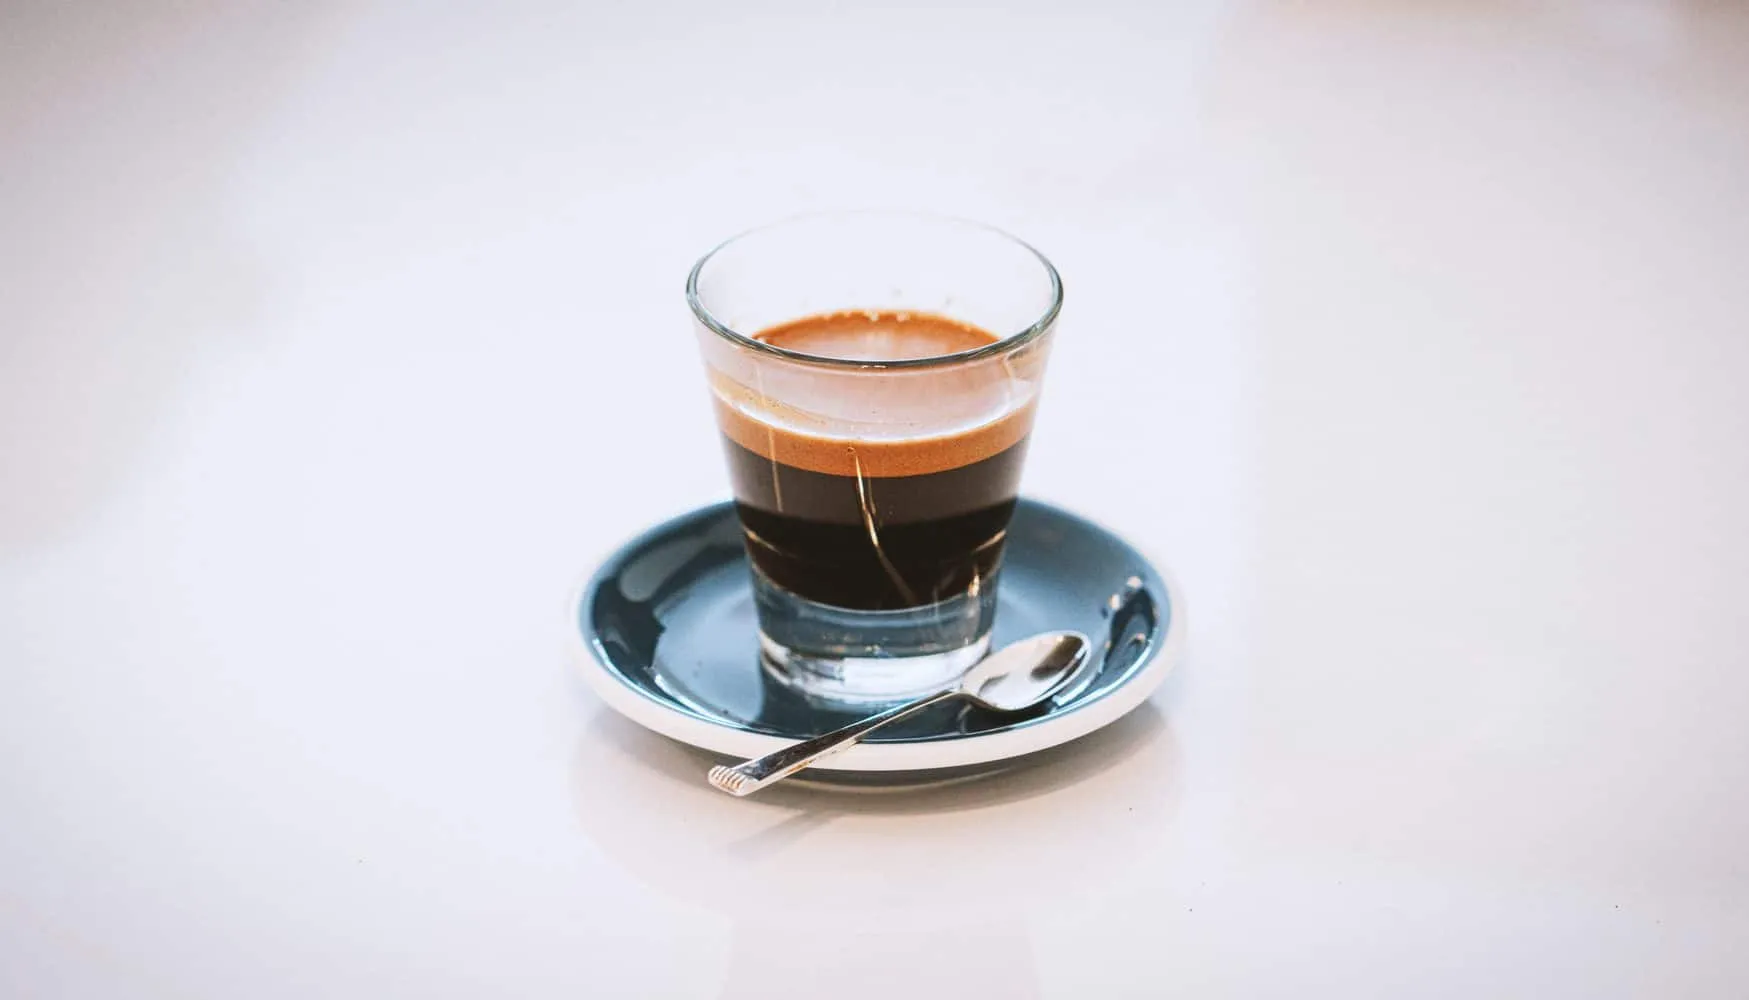 https://coffeefolk.b-cdn.net/wp-content/uploads/2022/05/Espresso-shot-scaled.jpg